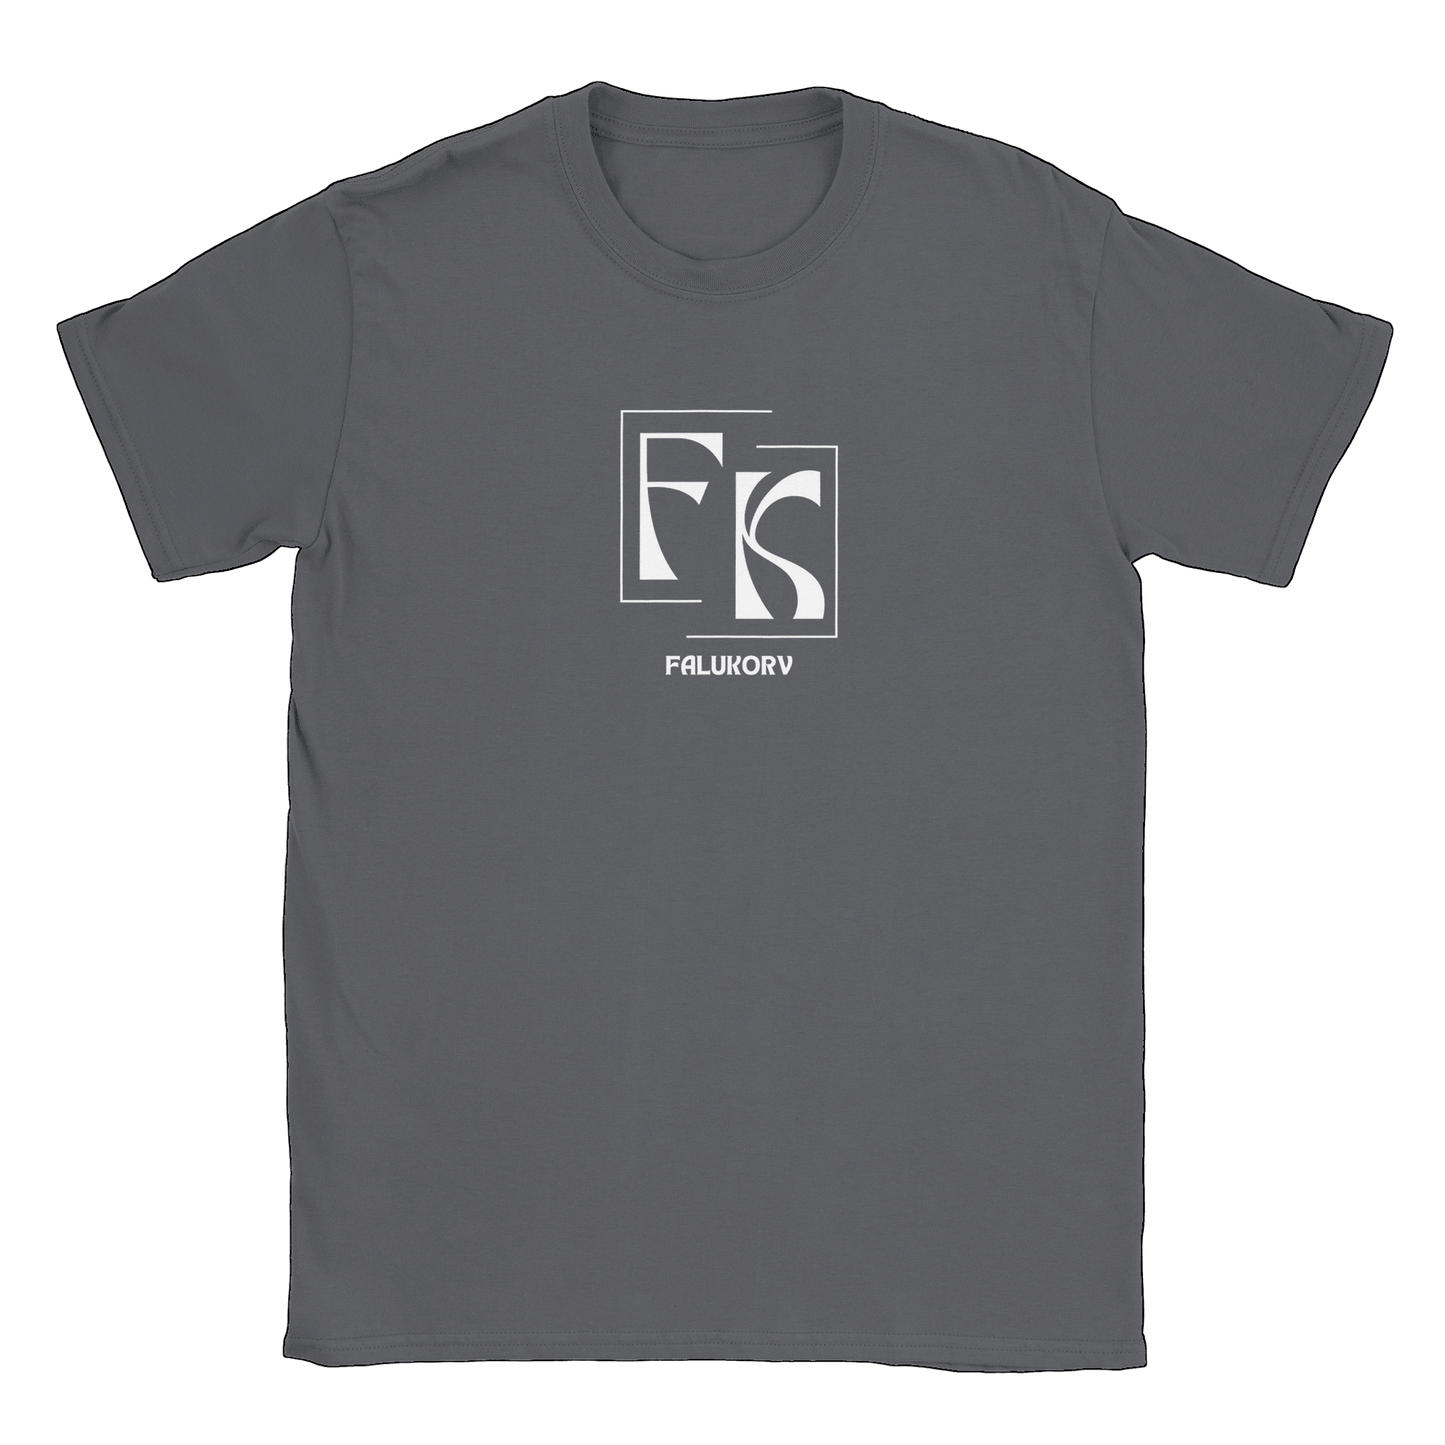 Falukorv - T-shirt Charcoal